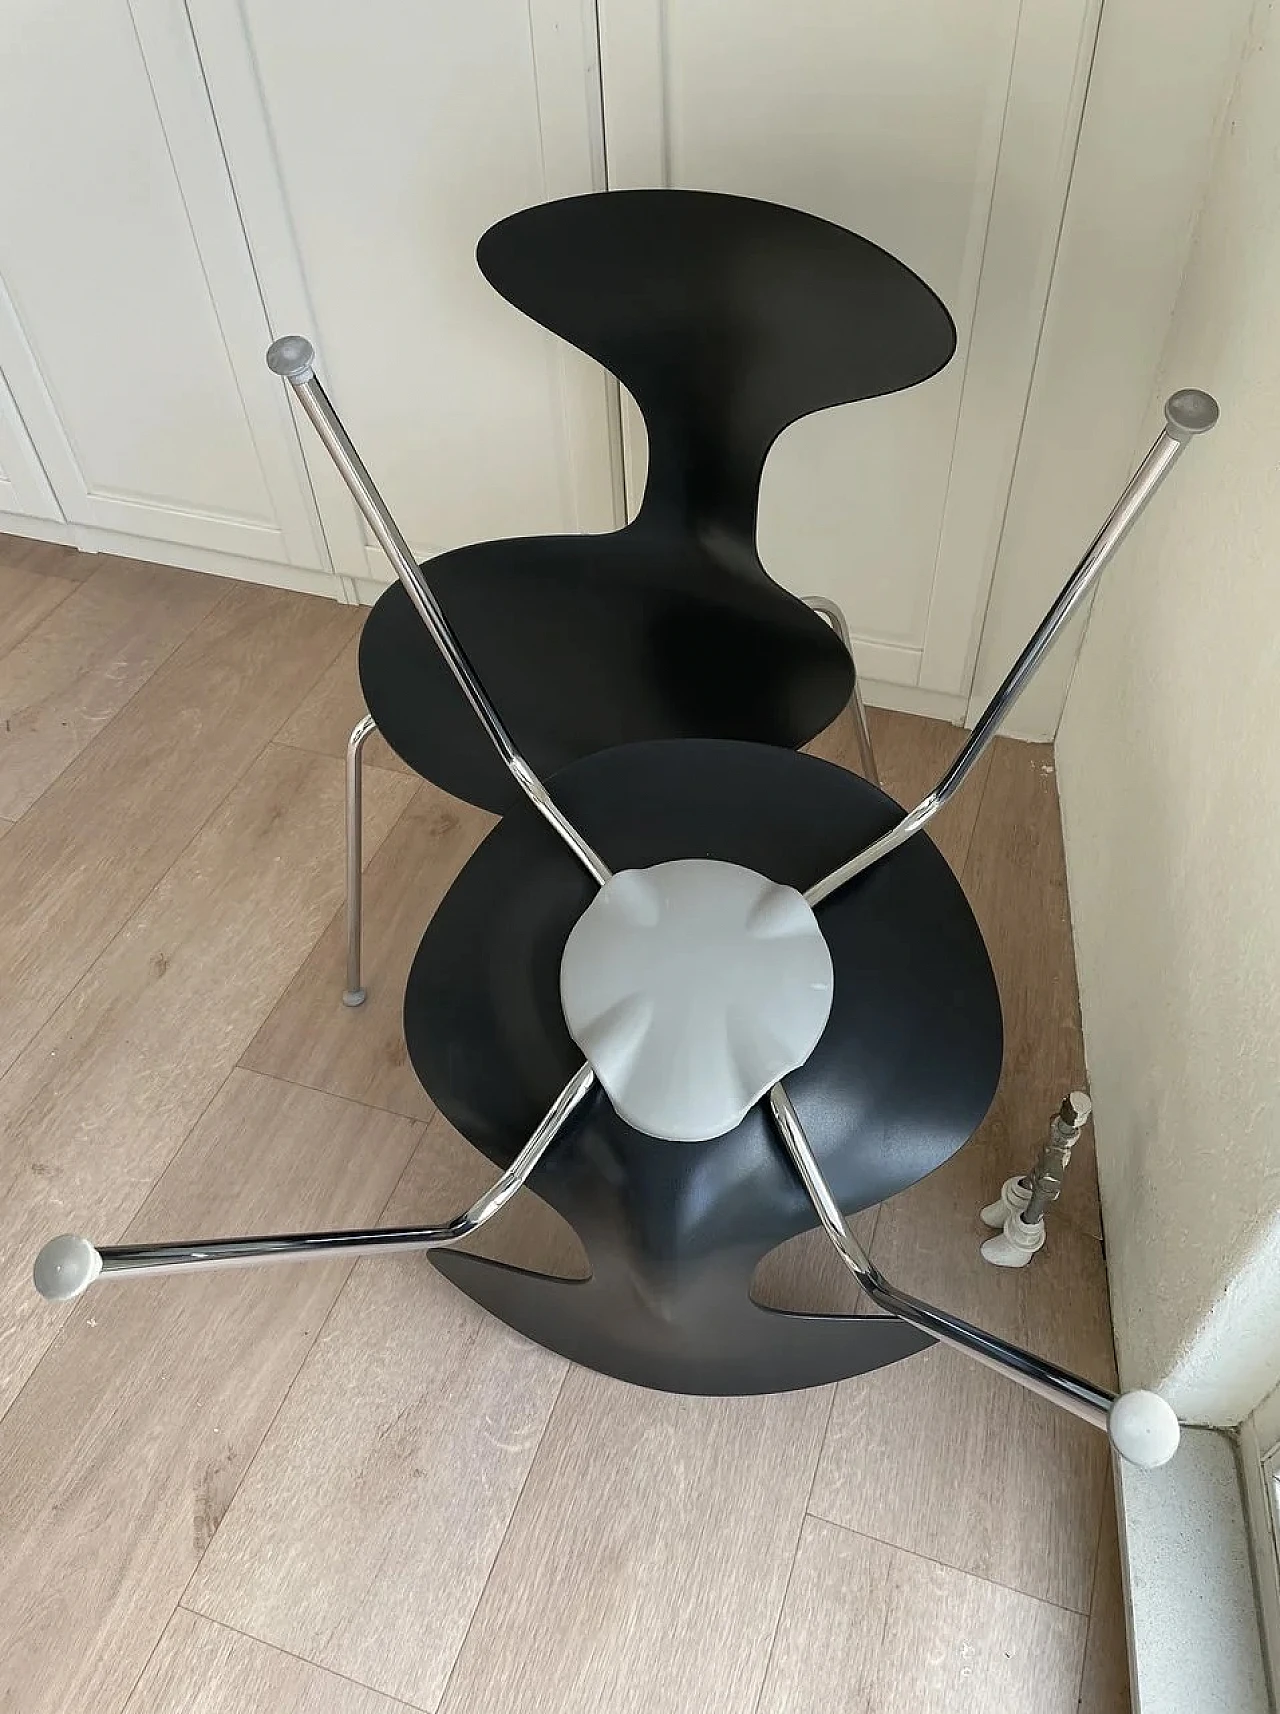 4 Orbit stackable chairs by Lovegrove & Bernhardt for Danerka, 2000s 19